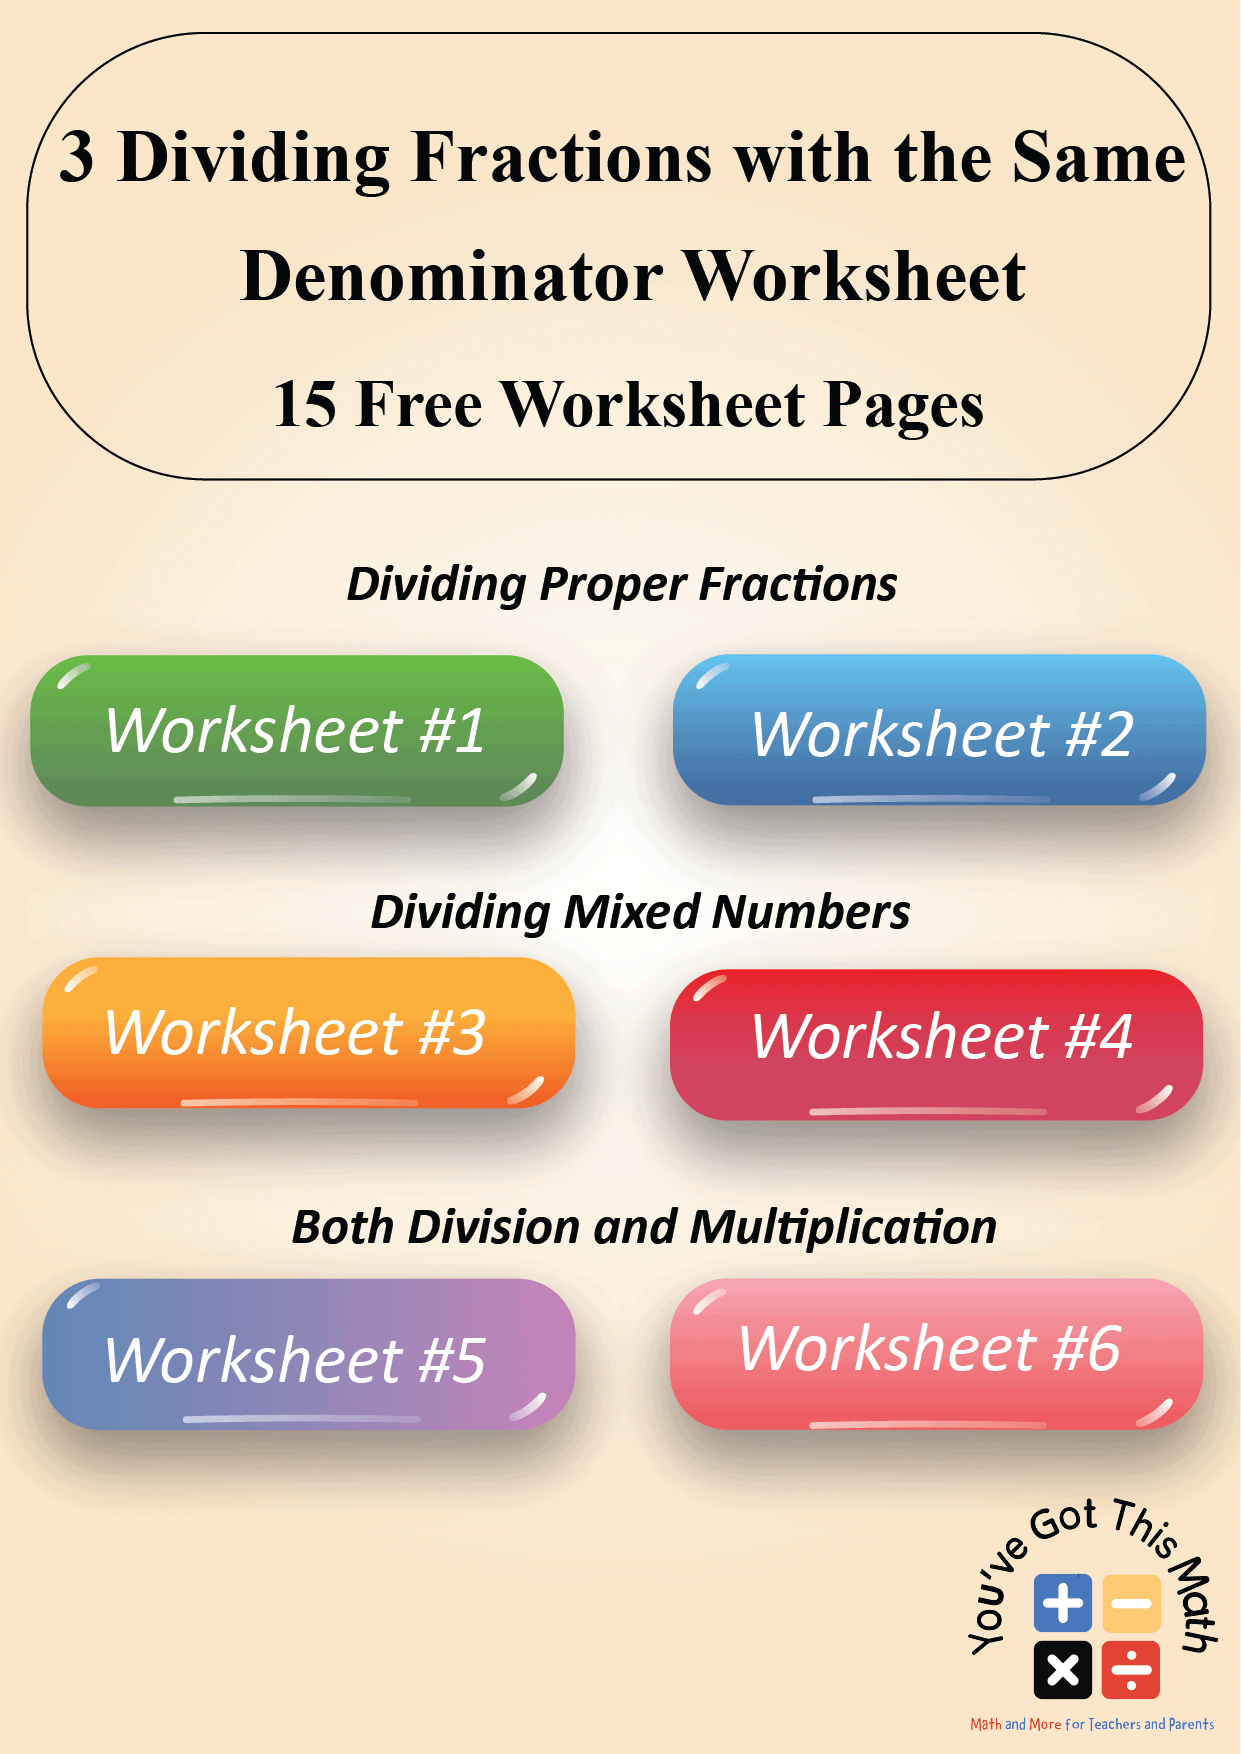 dividing fractions with the same denominator worksheet box image